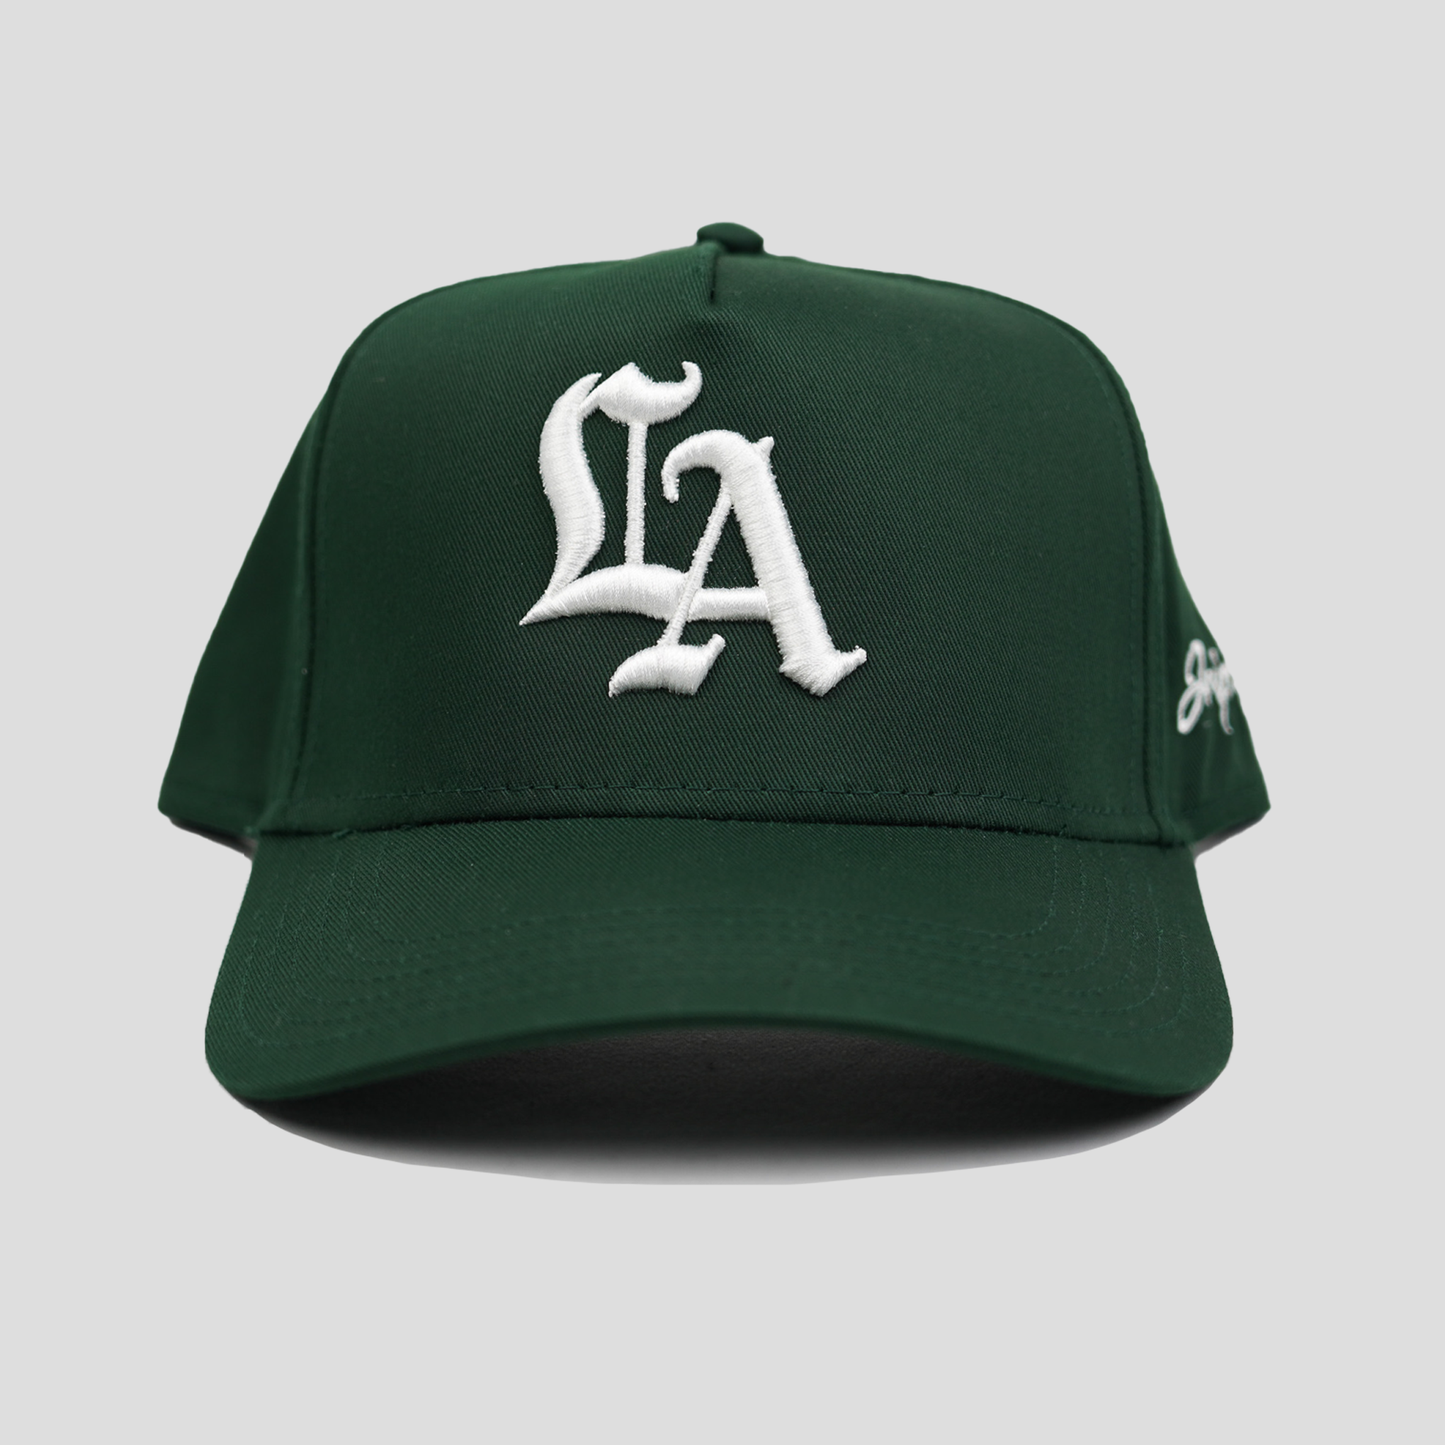 Old English LA Snapback Hat (GREEN)